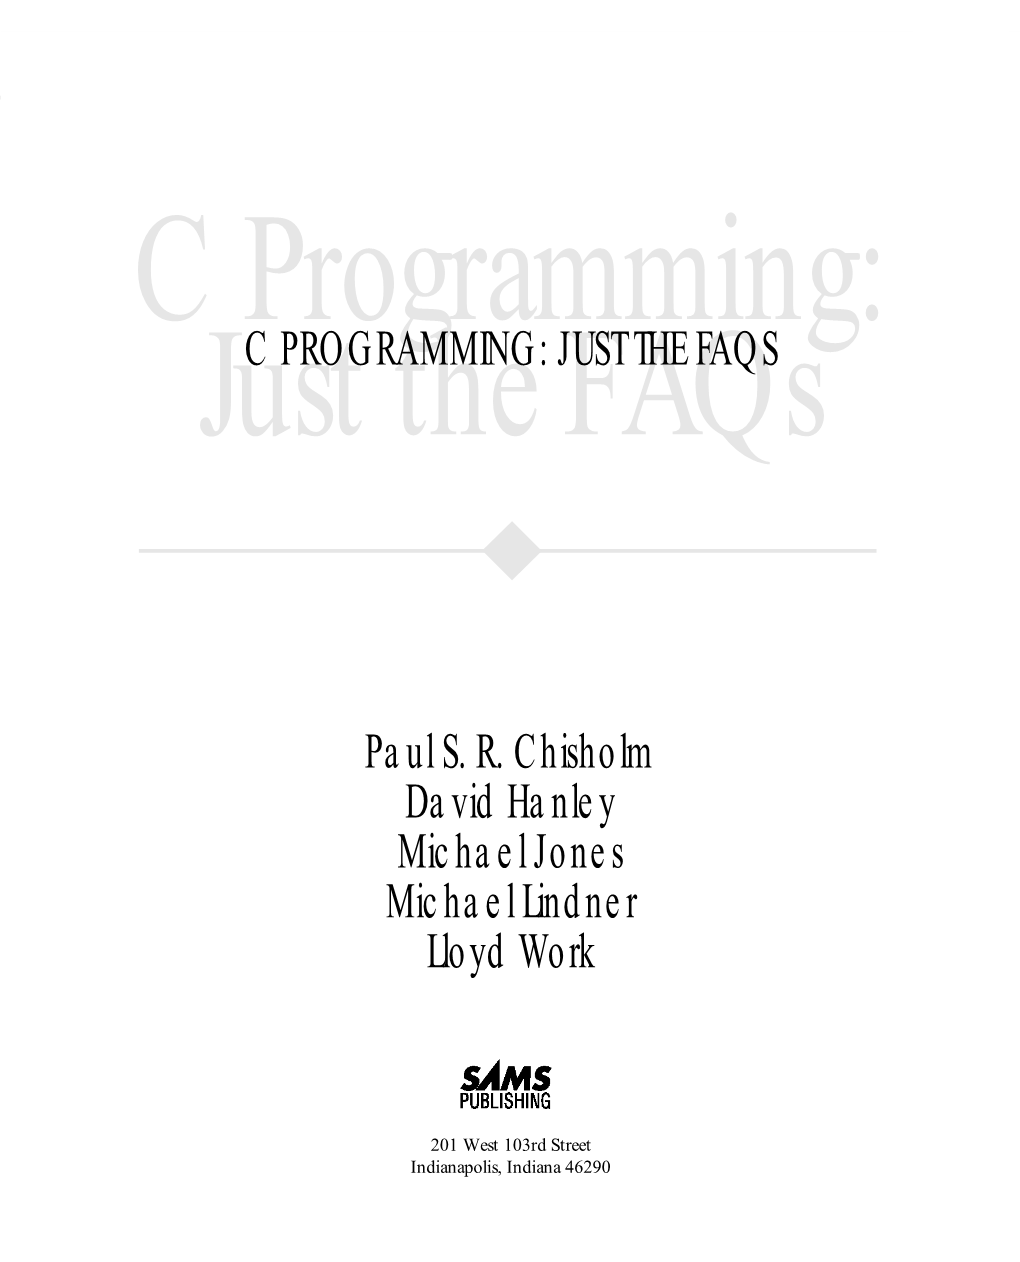 C PROGRAMMING: JUST the FAQS Paul S. R. Chisholm David Hanley Michael Jones Michael Lindner Lloyd Work